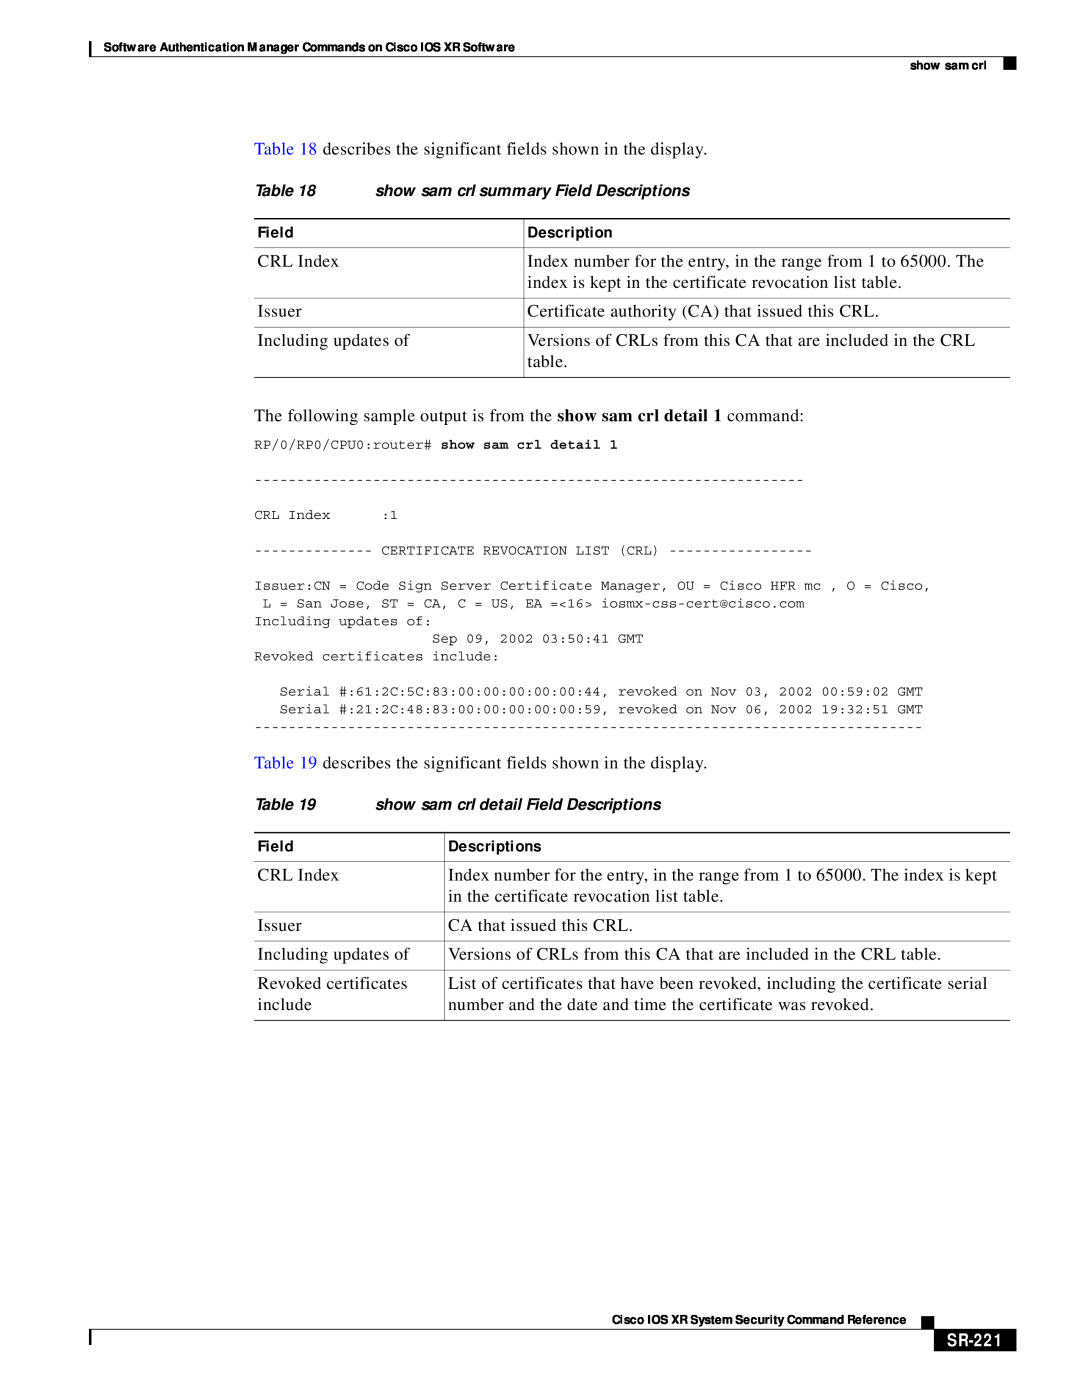 Cisco Systems SR-207 manual SR-221, Field, Descriptions 